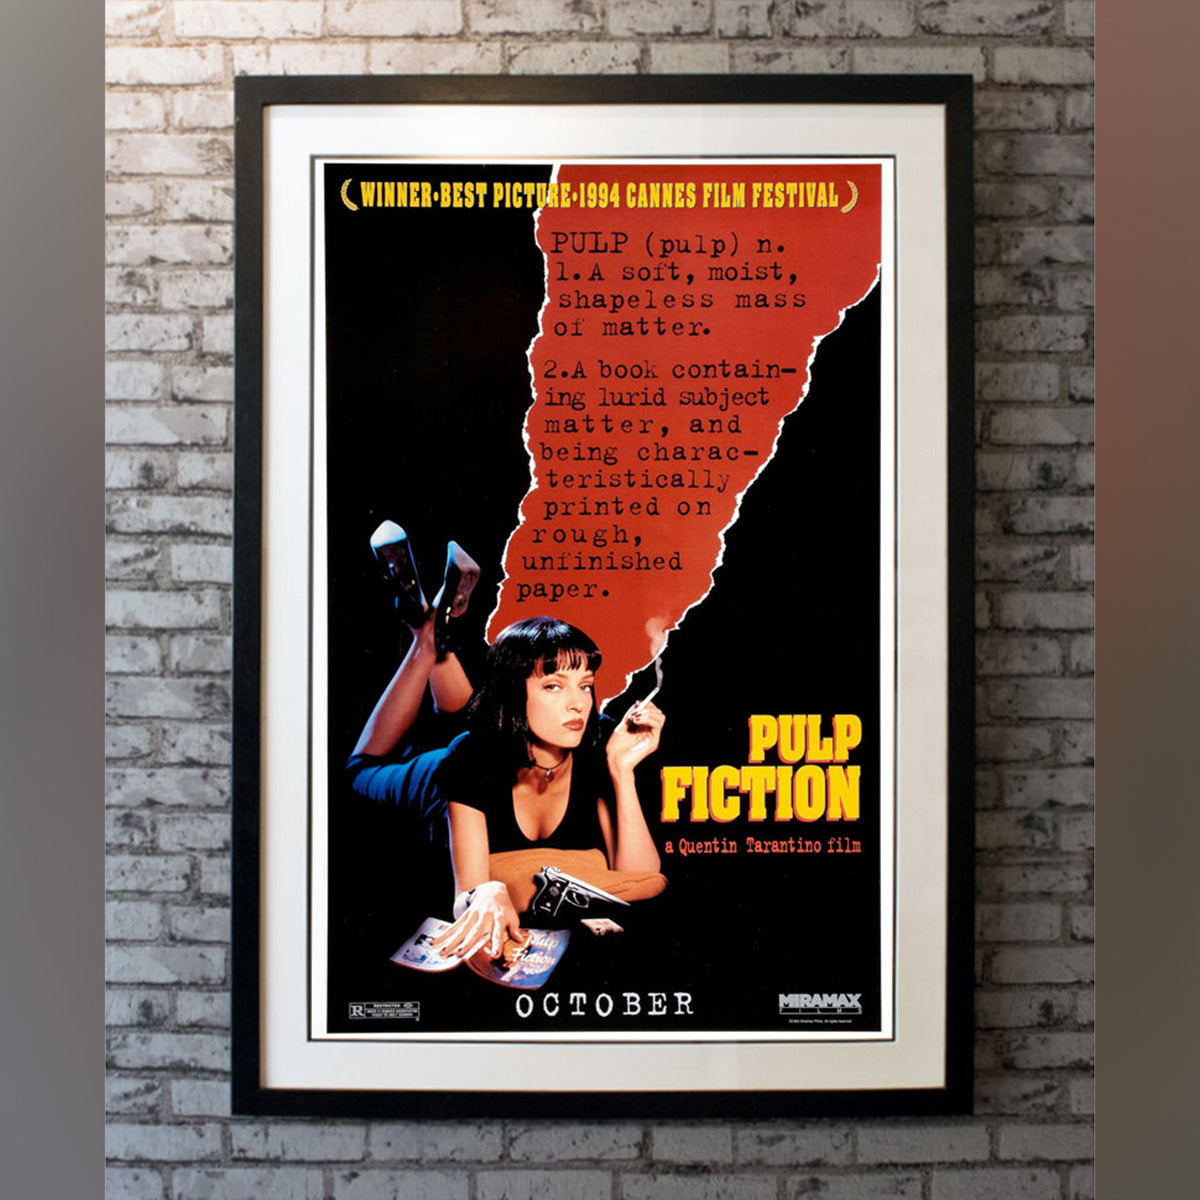 Original Movie Poster of Pulp Fiction (1994)